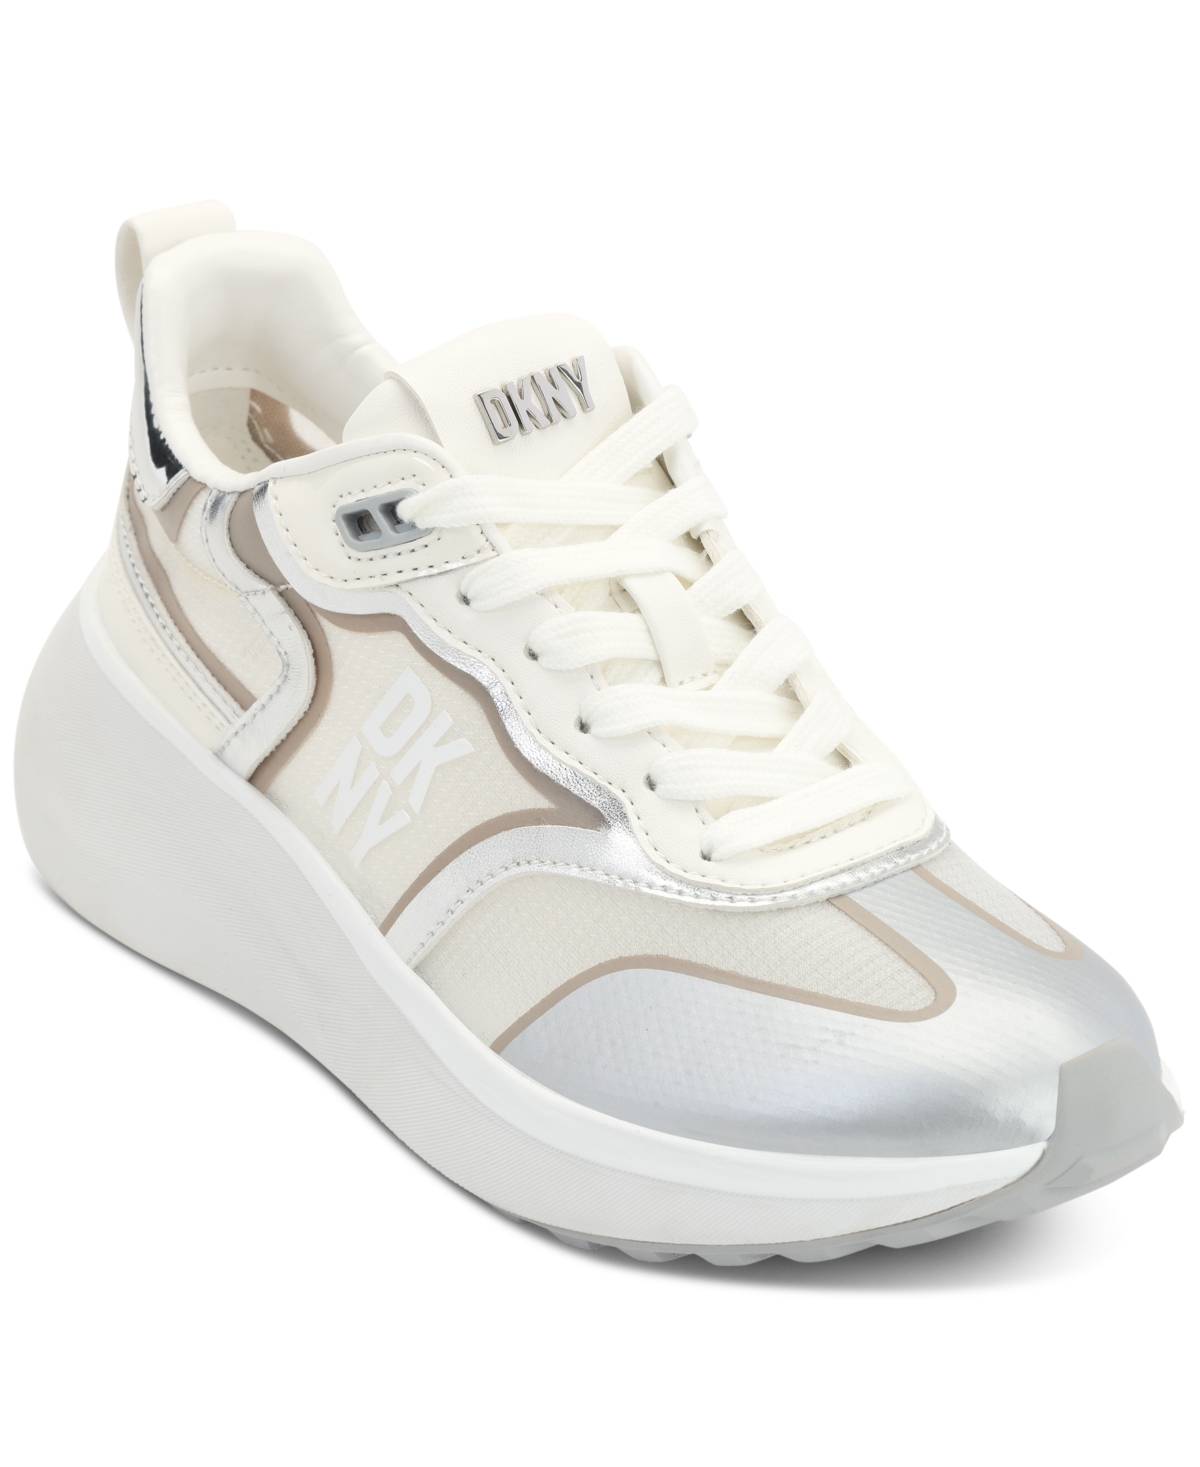 Dkny Aki Sneaker In White/ Light Toffee | ModeSens